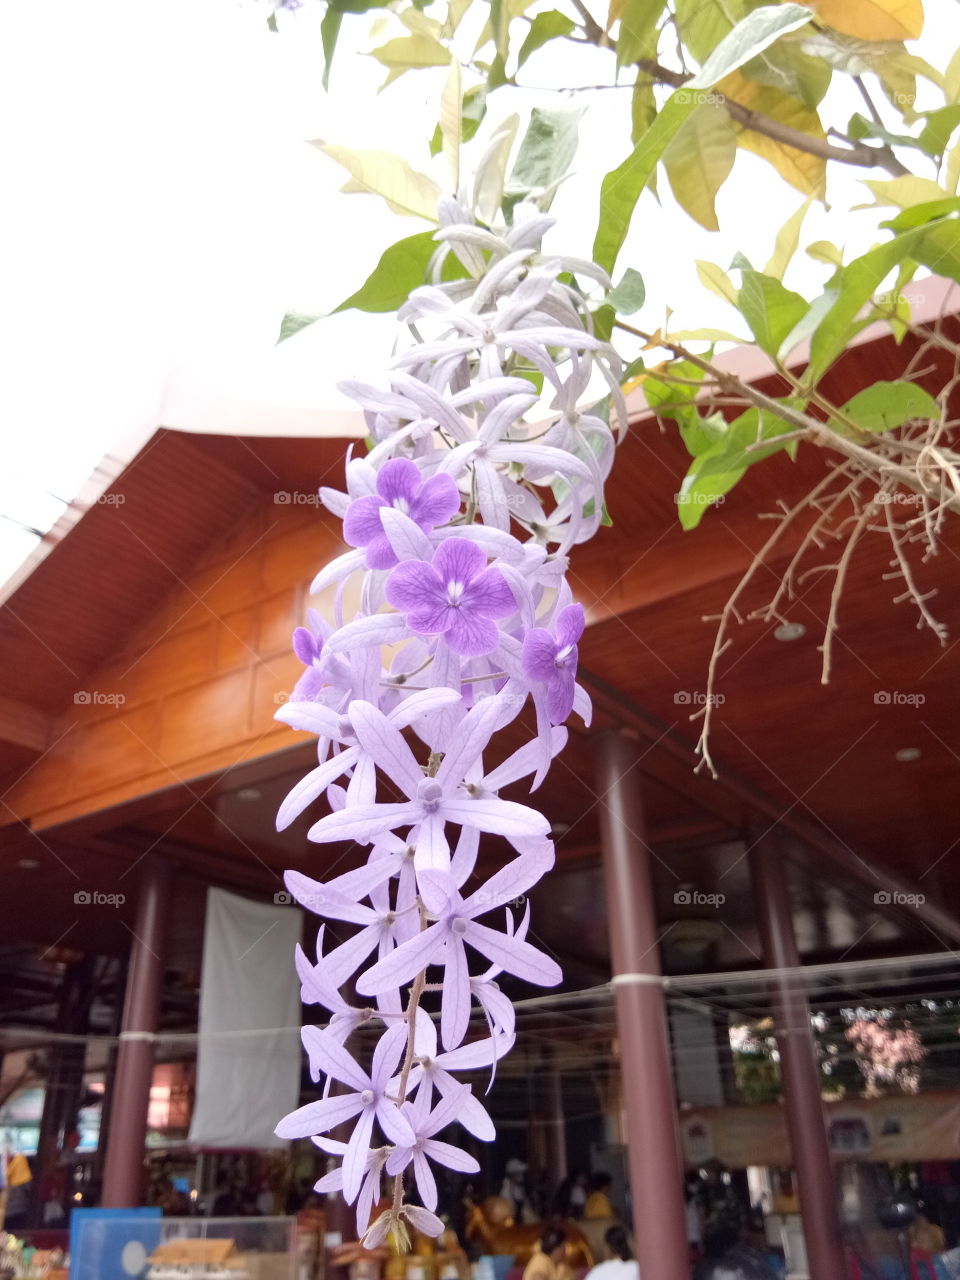 flower
temple
thailand